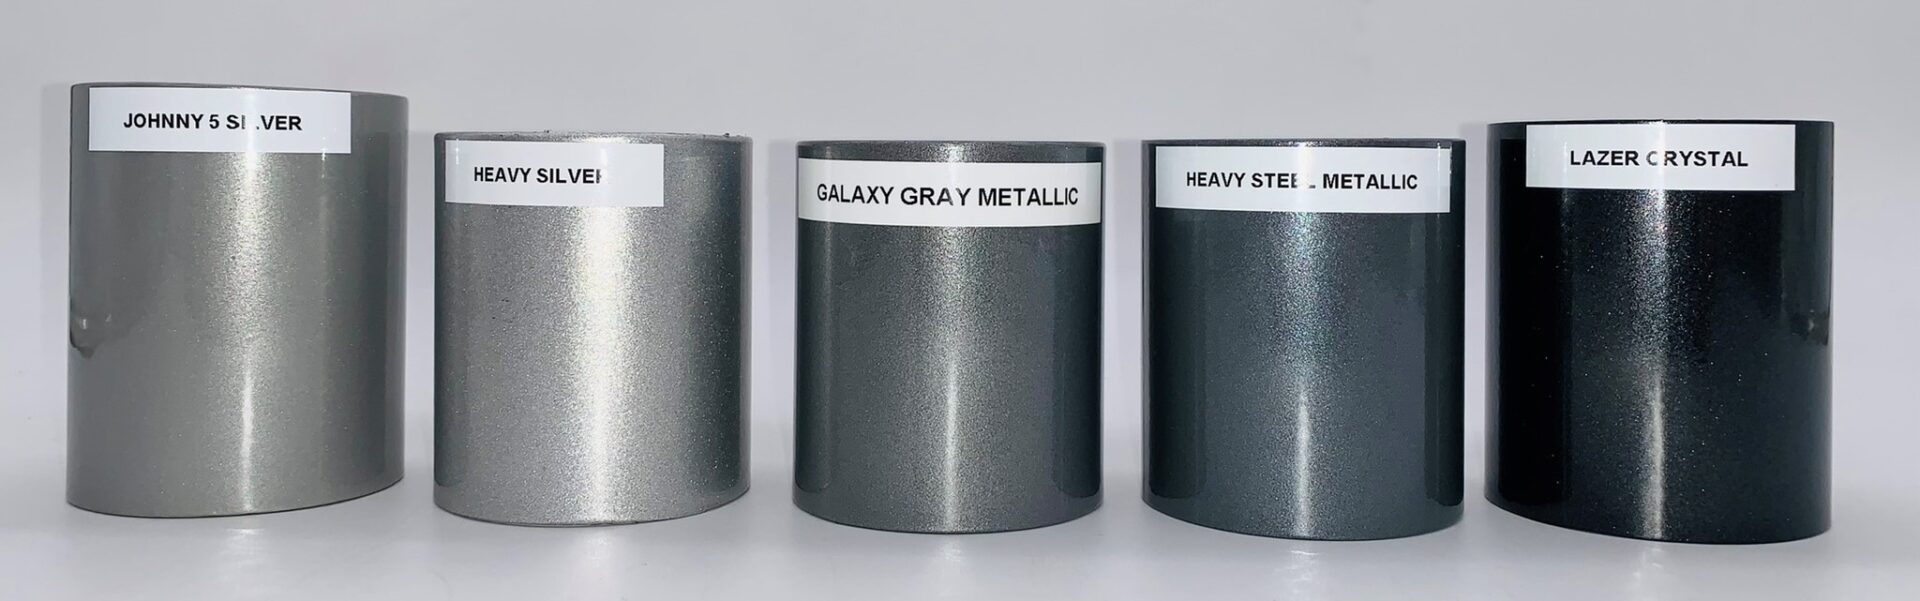 Five heavy and galaxy gray metallic silver